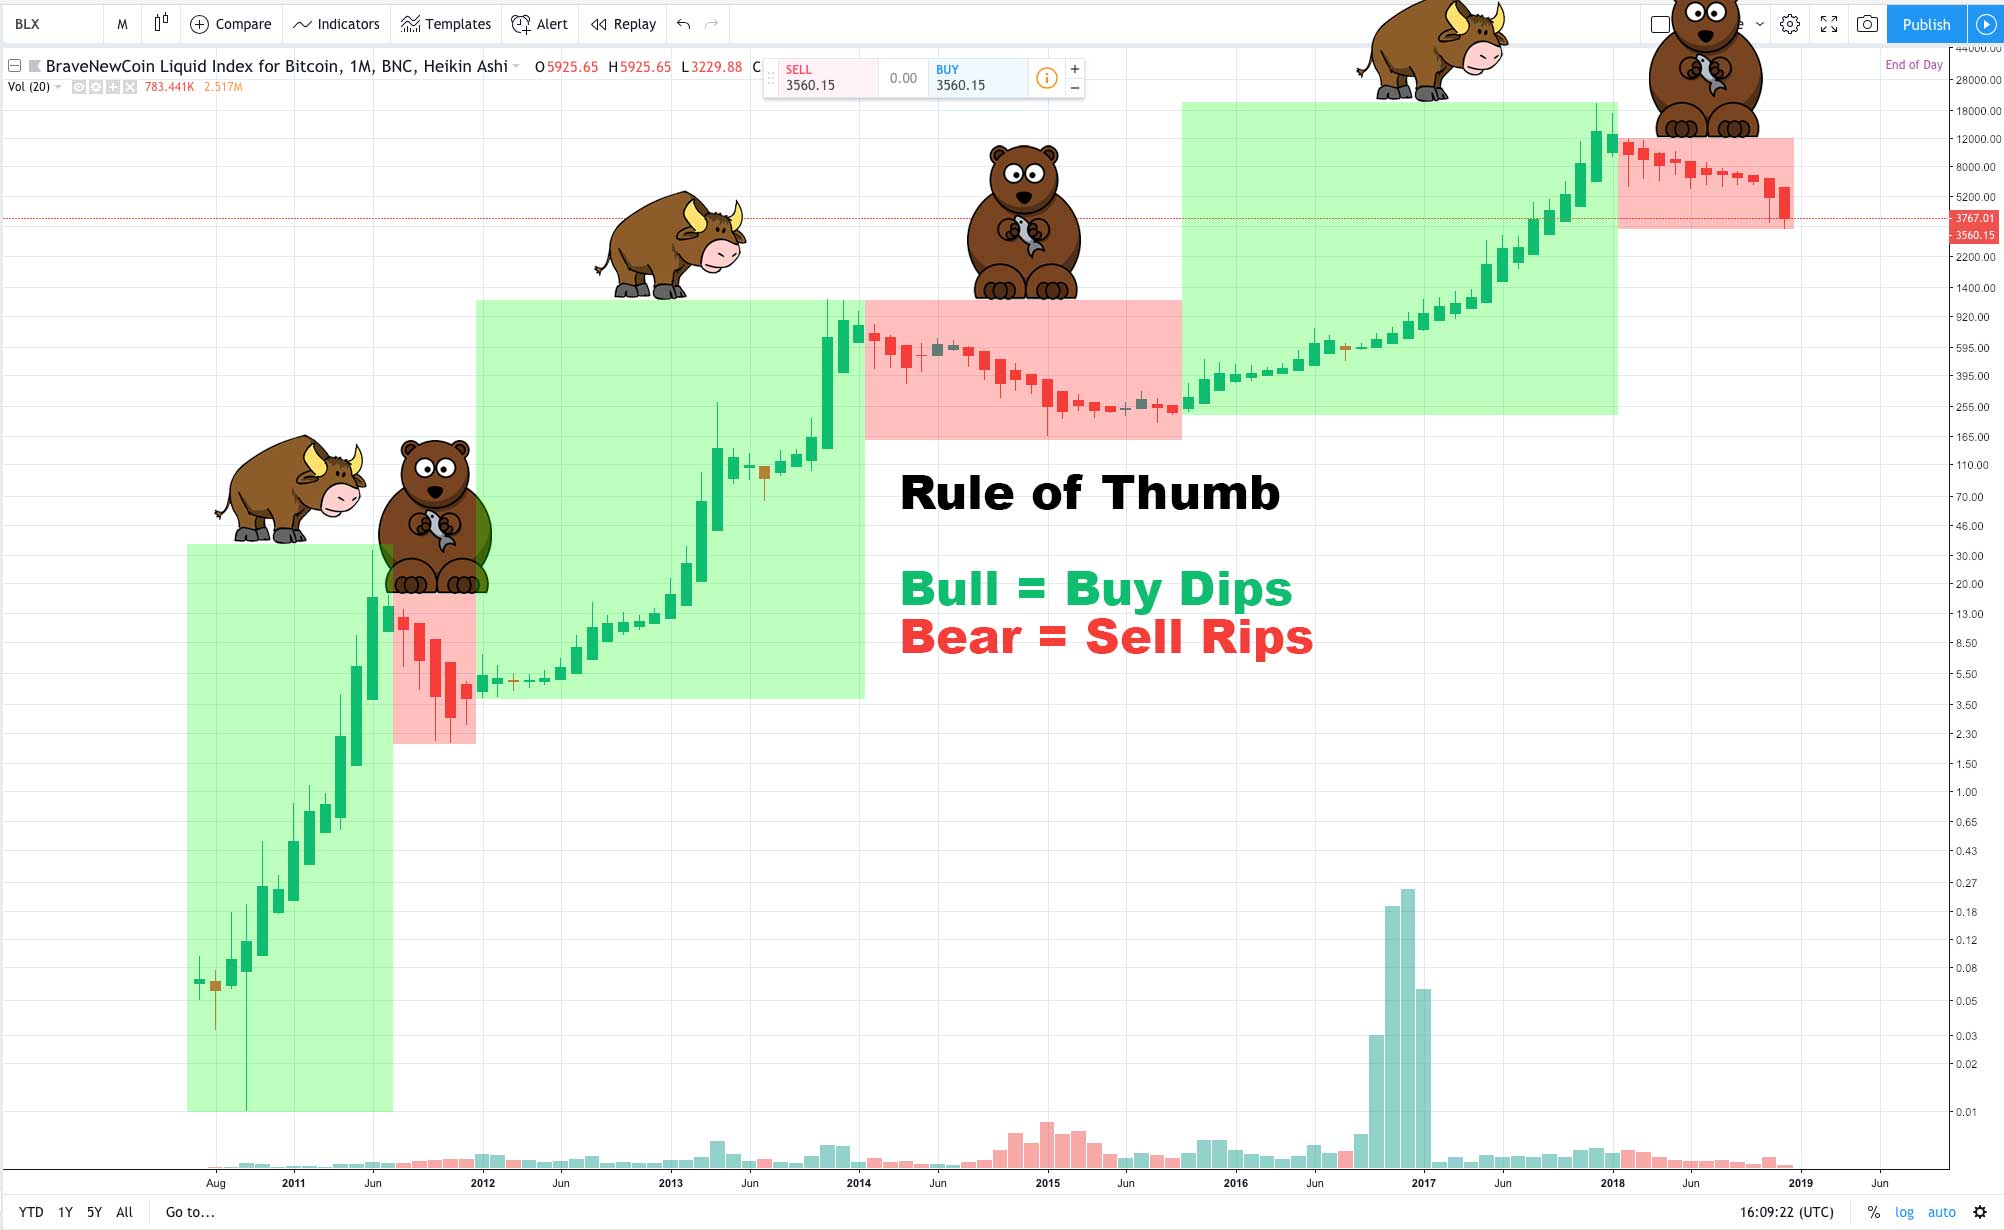 bear market investing strategies pdf file